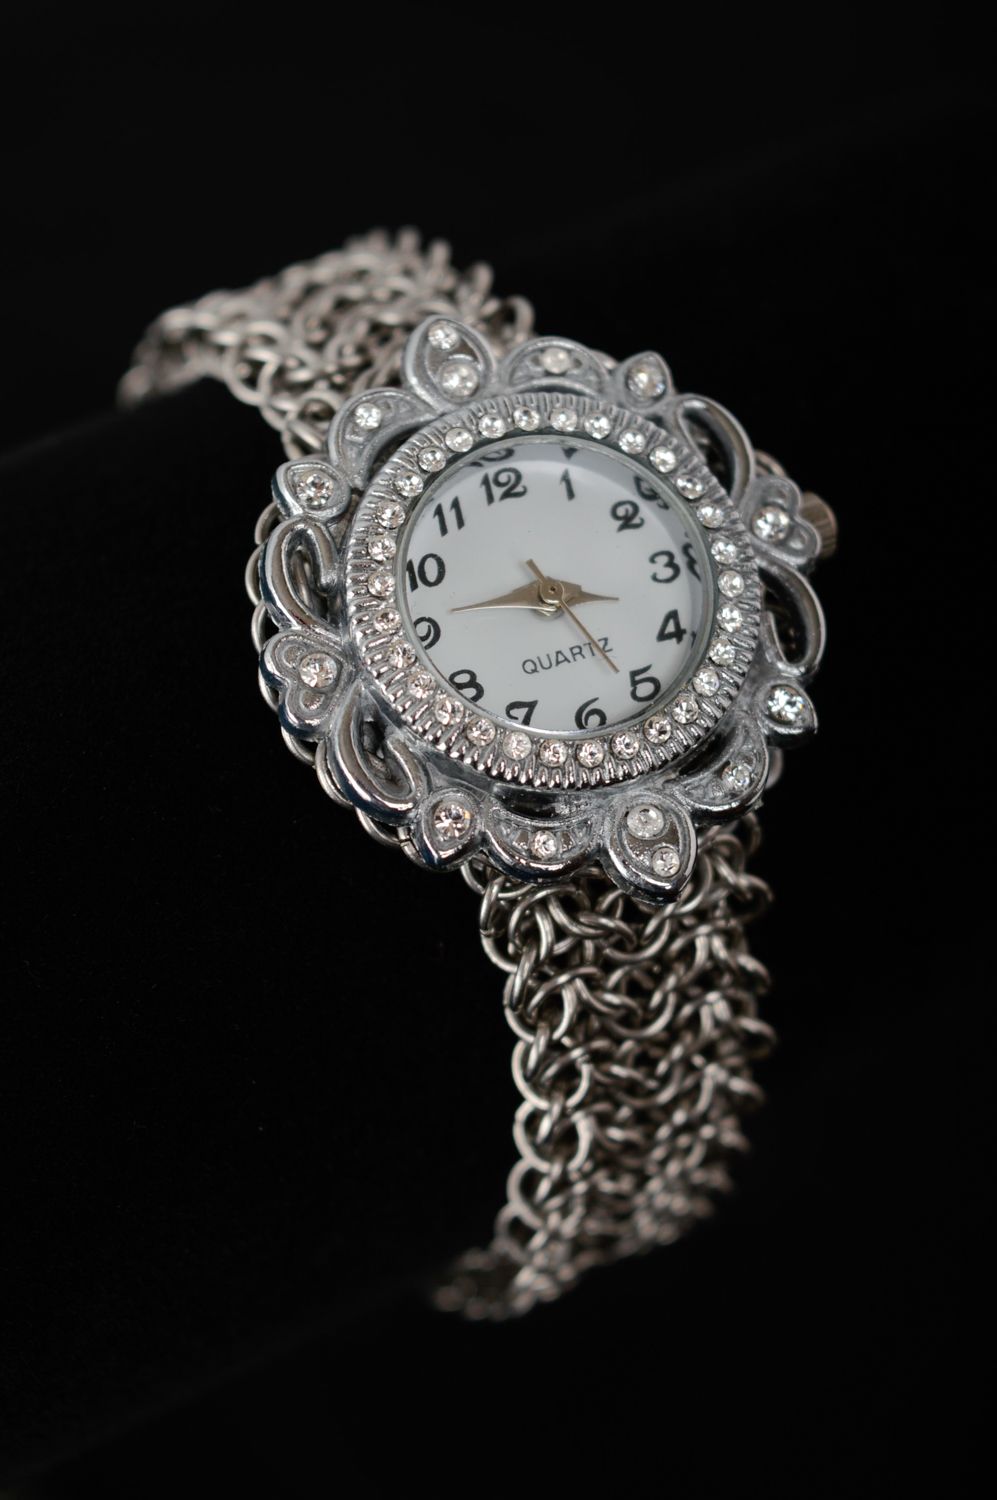 Reloj artesanal con pulsera de acero inoxidable foto 1